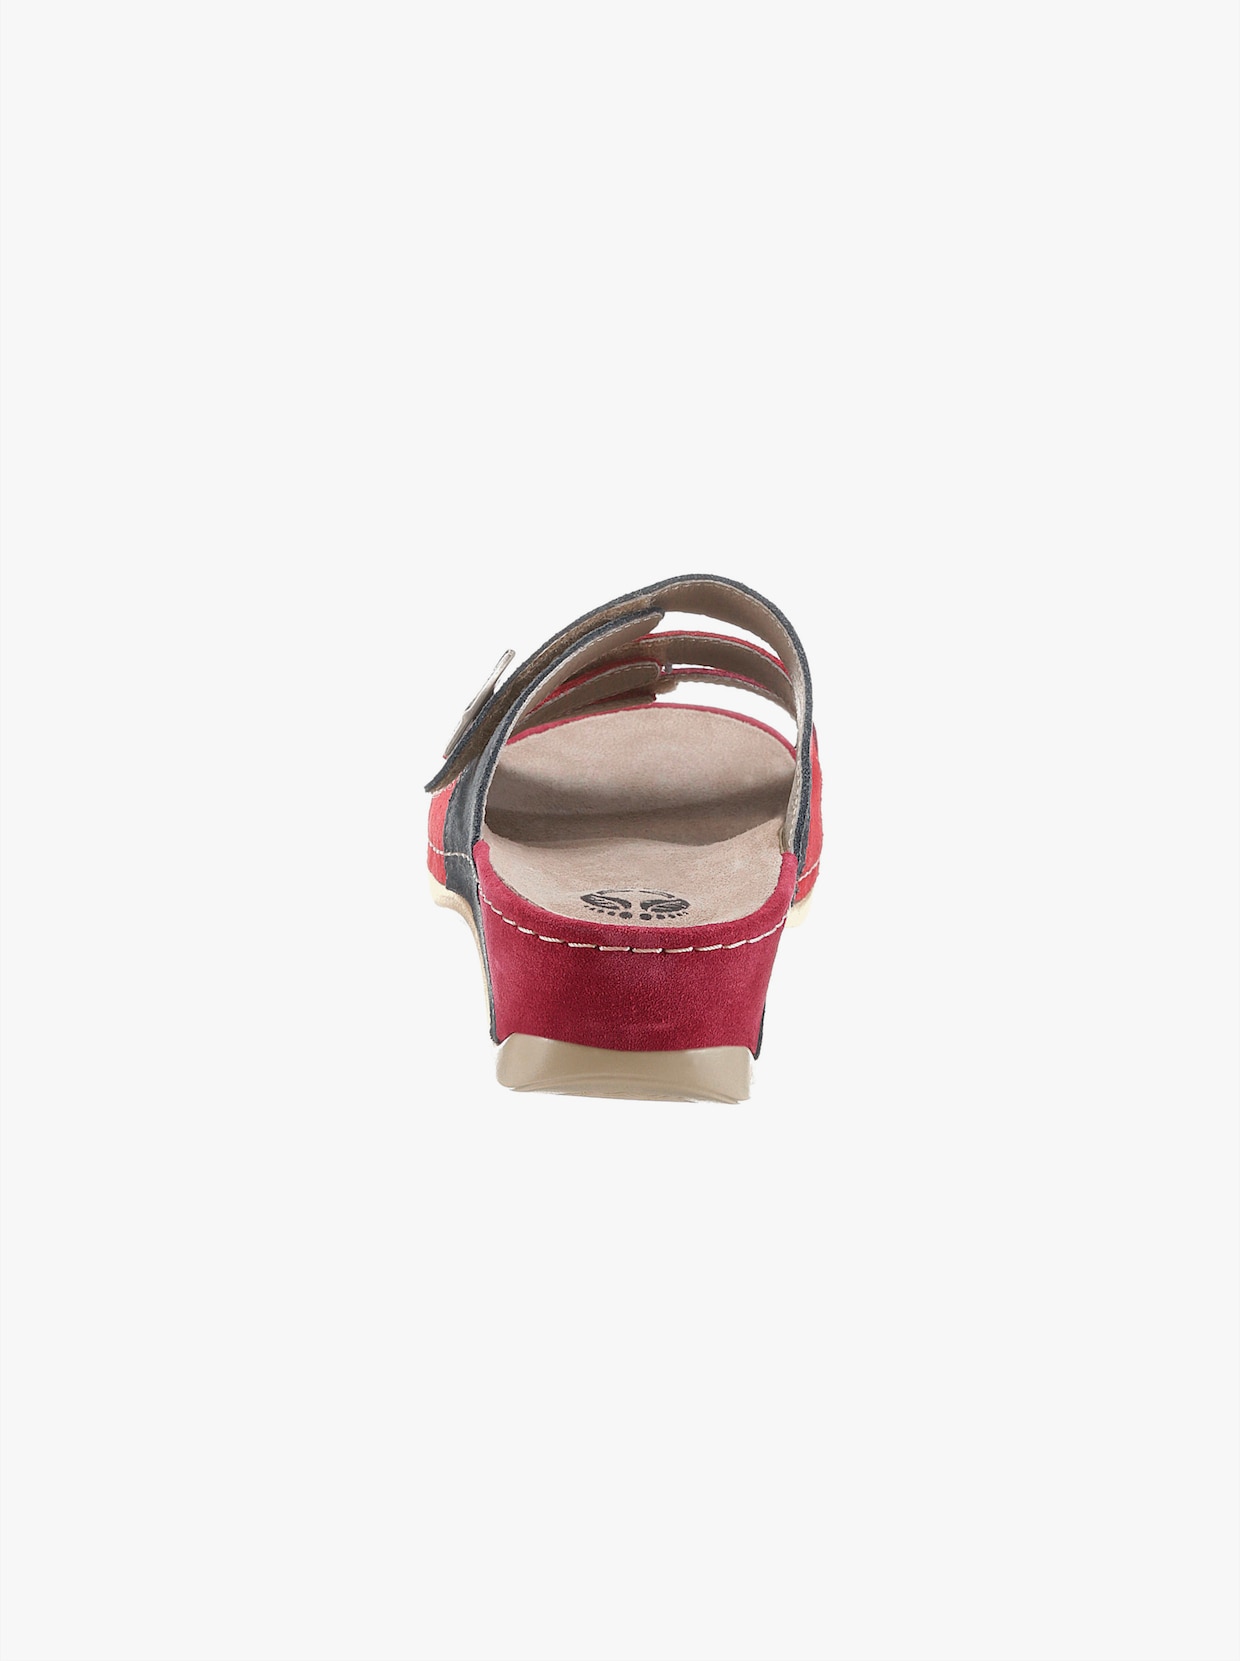 Mubb slippers - rood/grijs